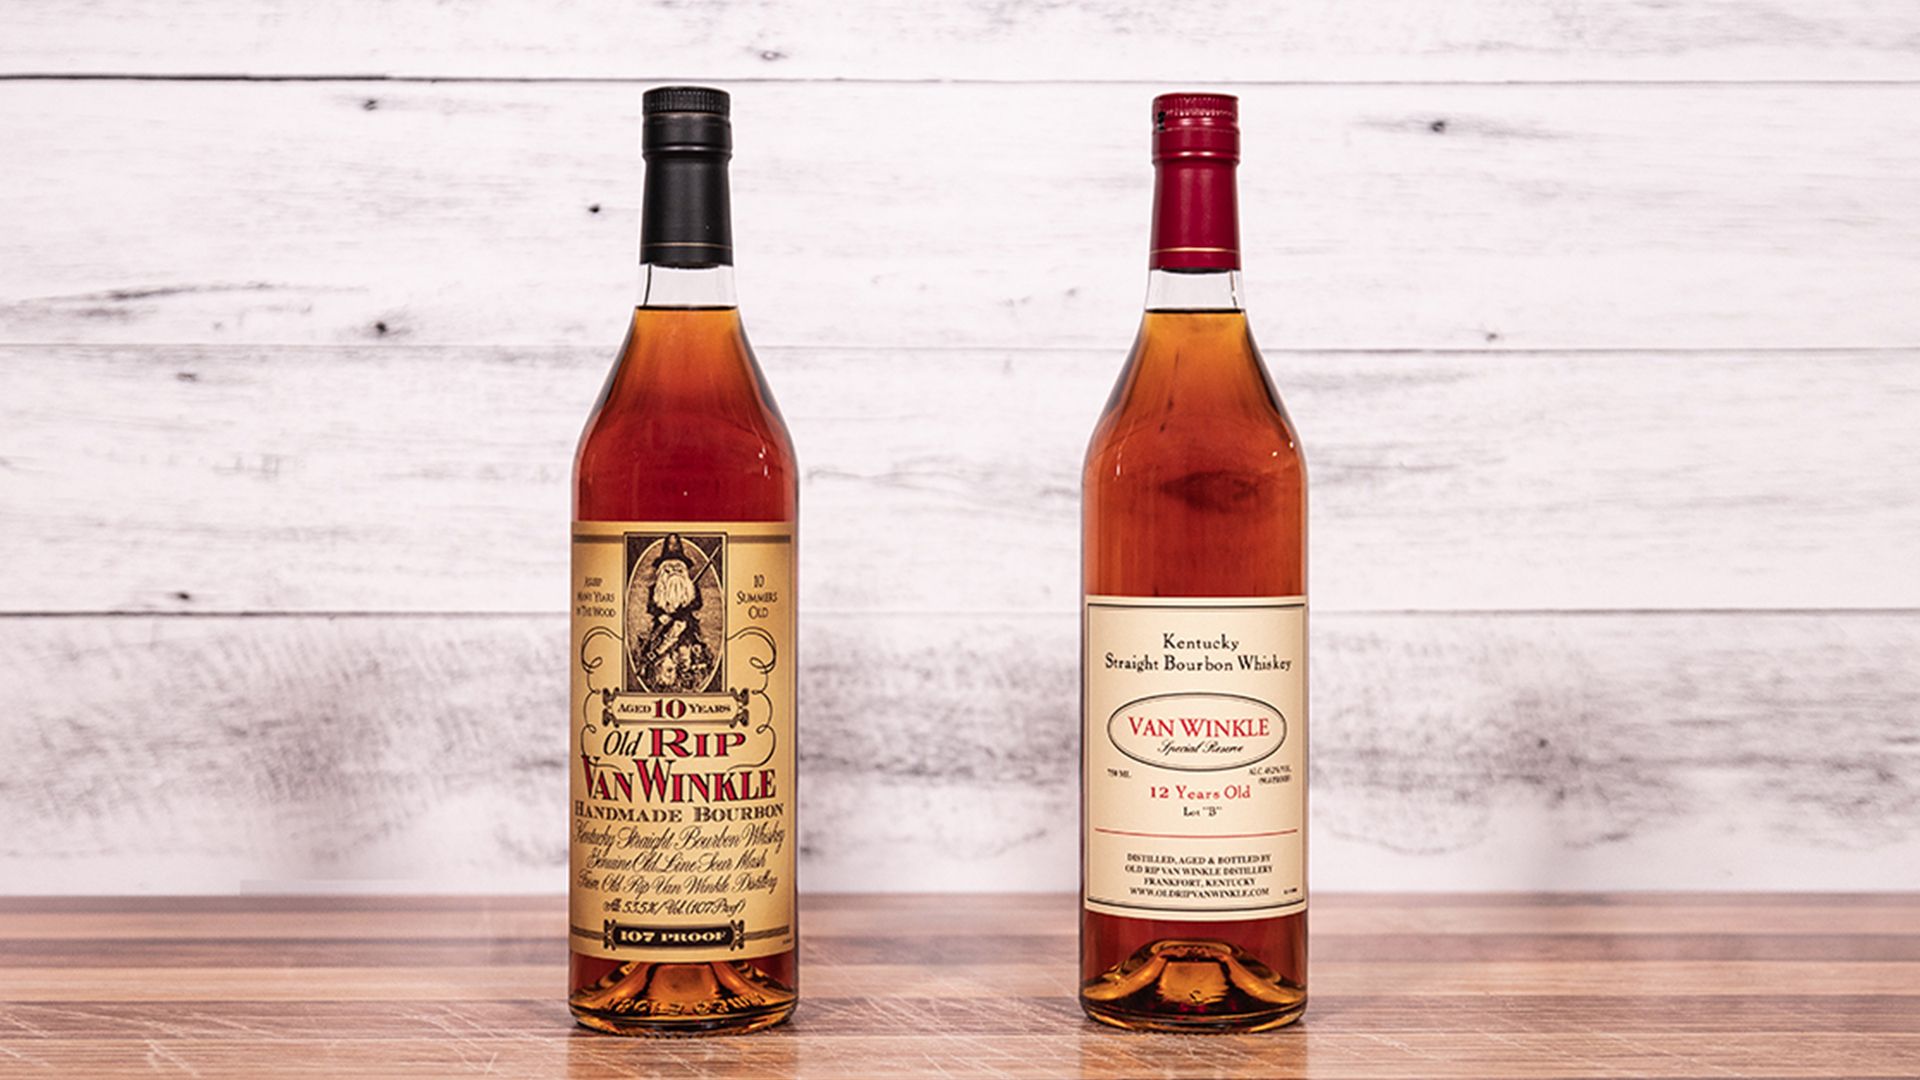 Photo shows two bottles of Pappy Van Winkle bourbon: Old Rip Van Winkle 10 Year on left, Van Winkle Special Reserve Bourbon 12 Year on right 